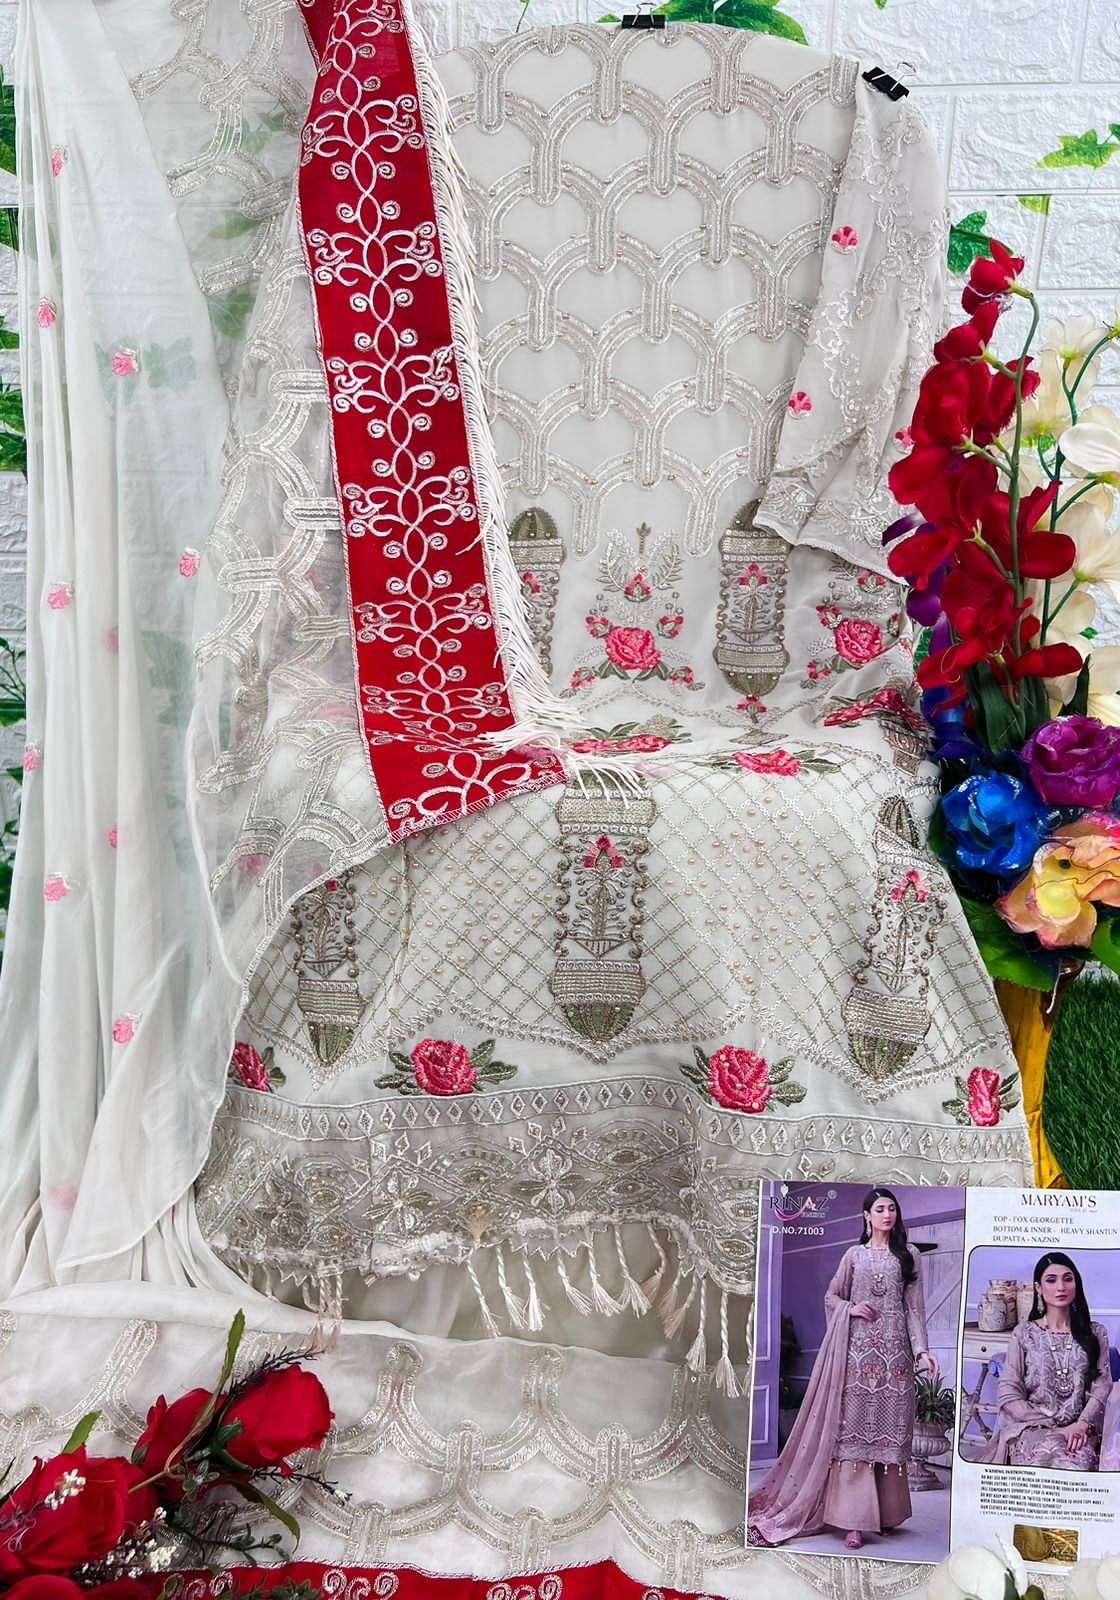 rinaz maryam gold vol-23 71001-71005 series designer wedding wear pakistani salwar kameez wholesaler surat gujarat